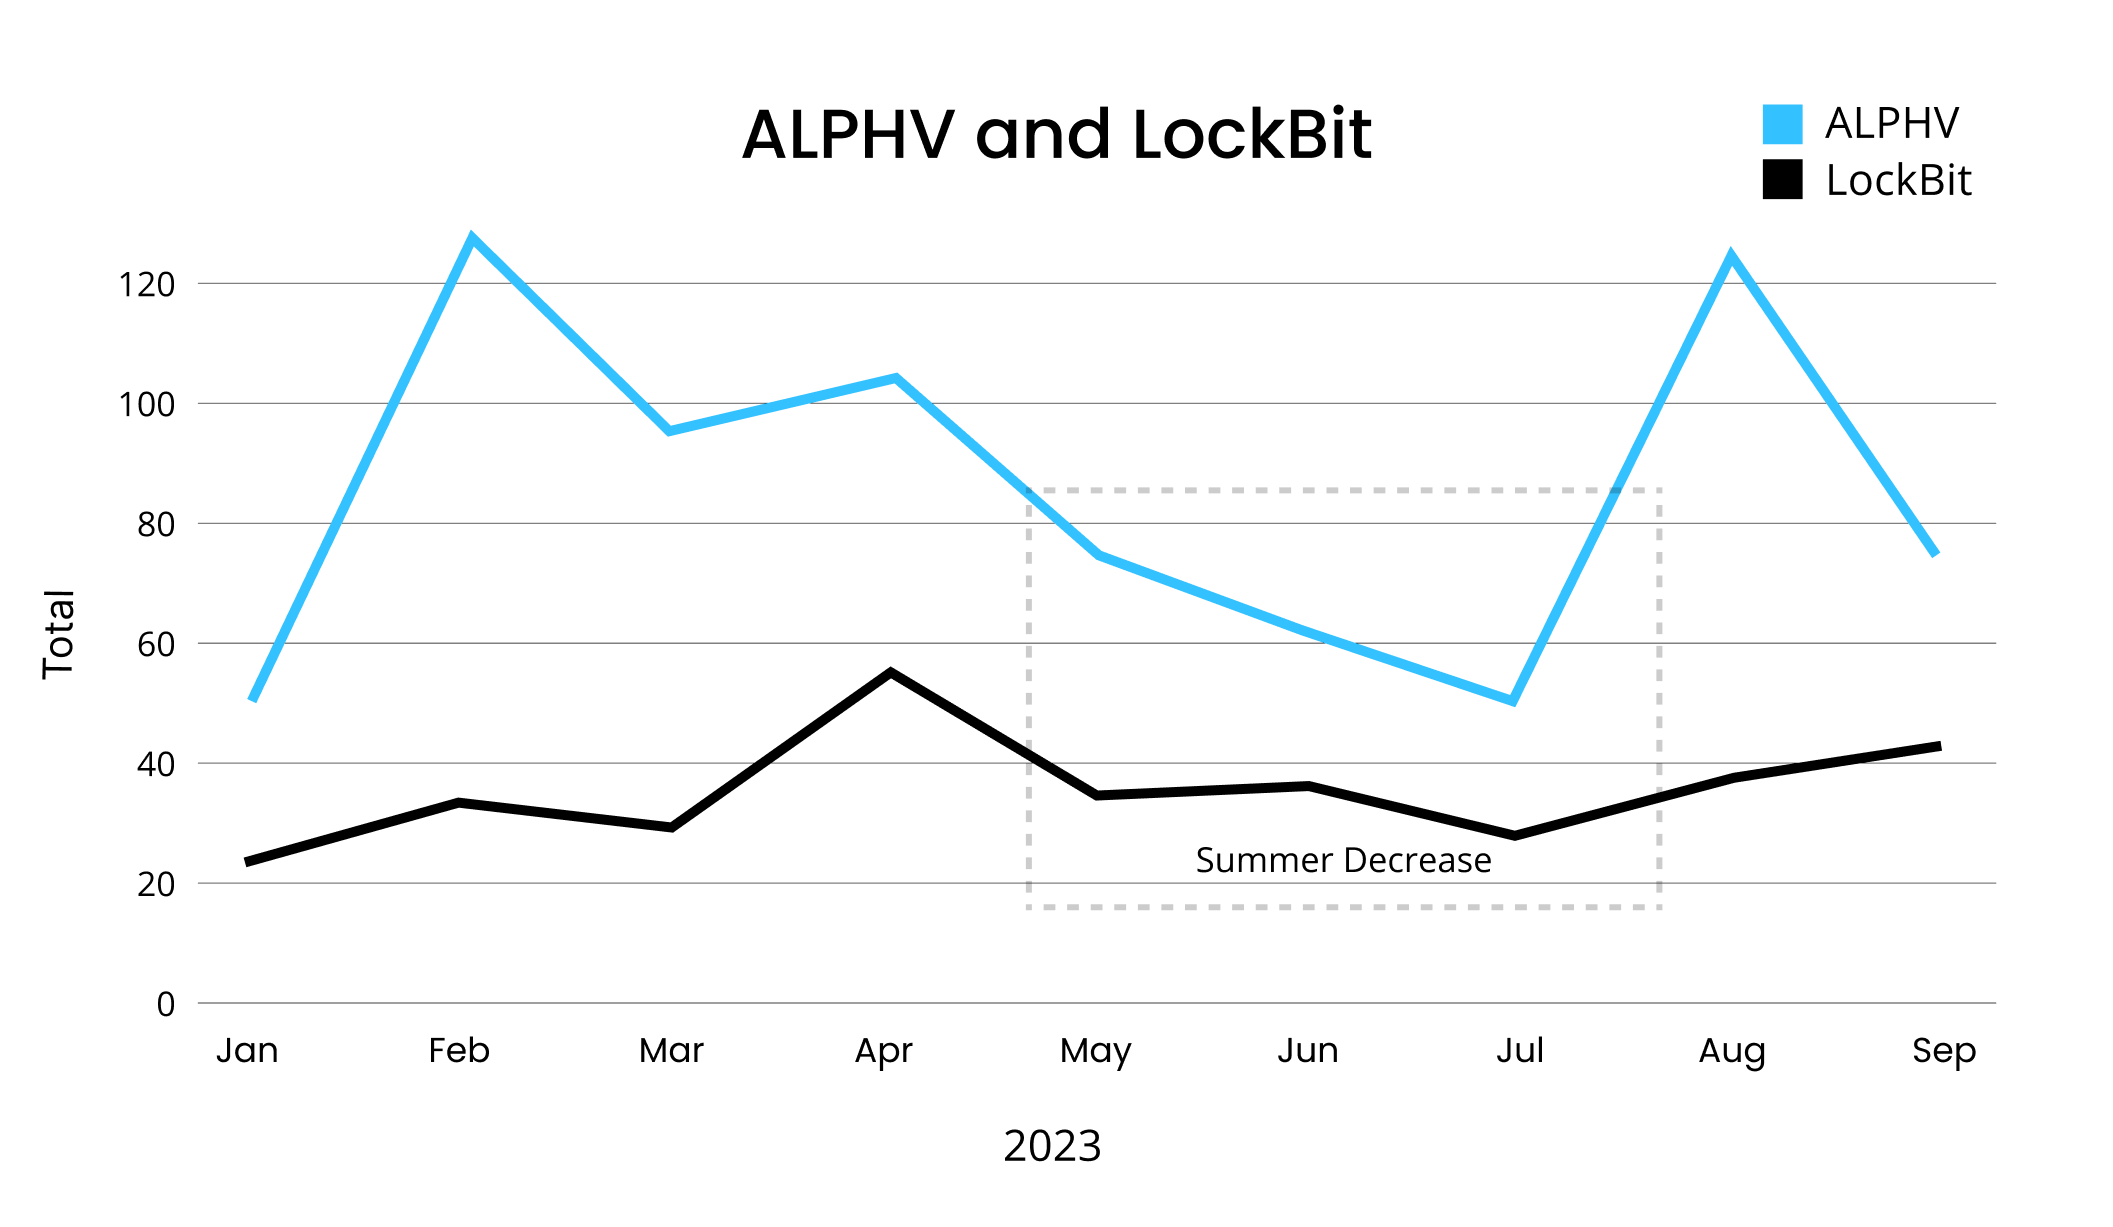 [LINE GRAPH] ALPHV and LockBit Attacks from Jan. 2023 - Sep. 2023